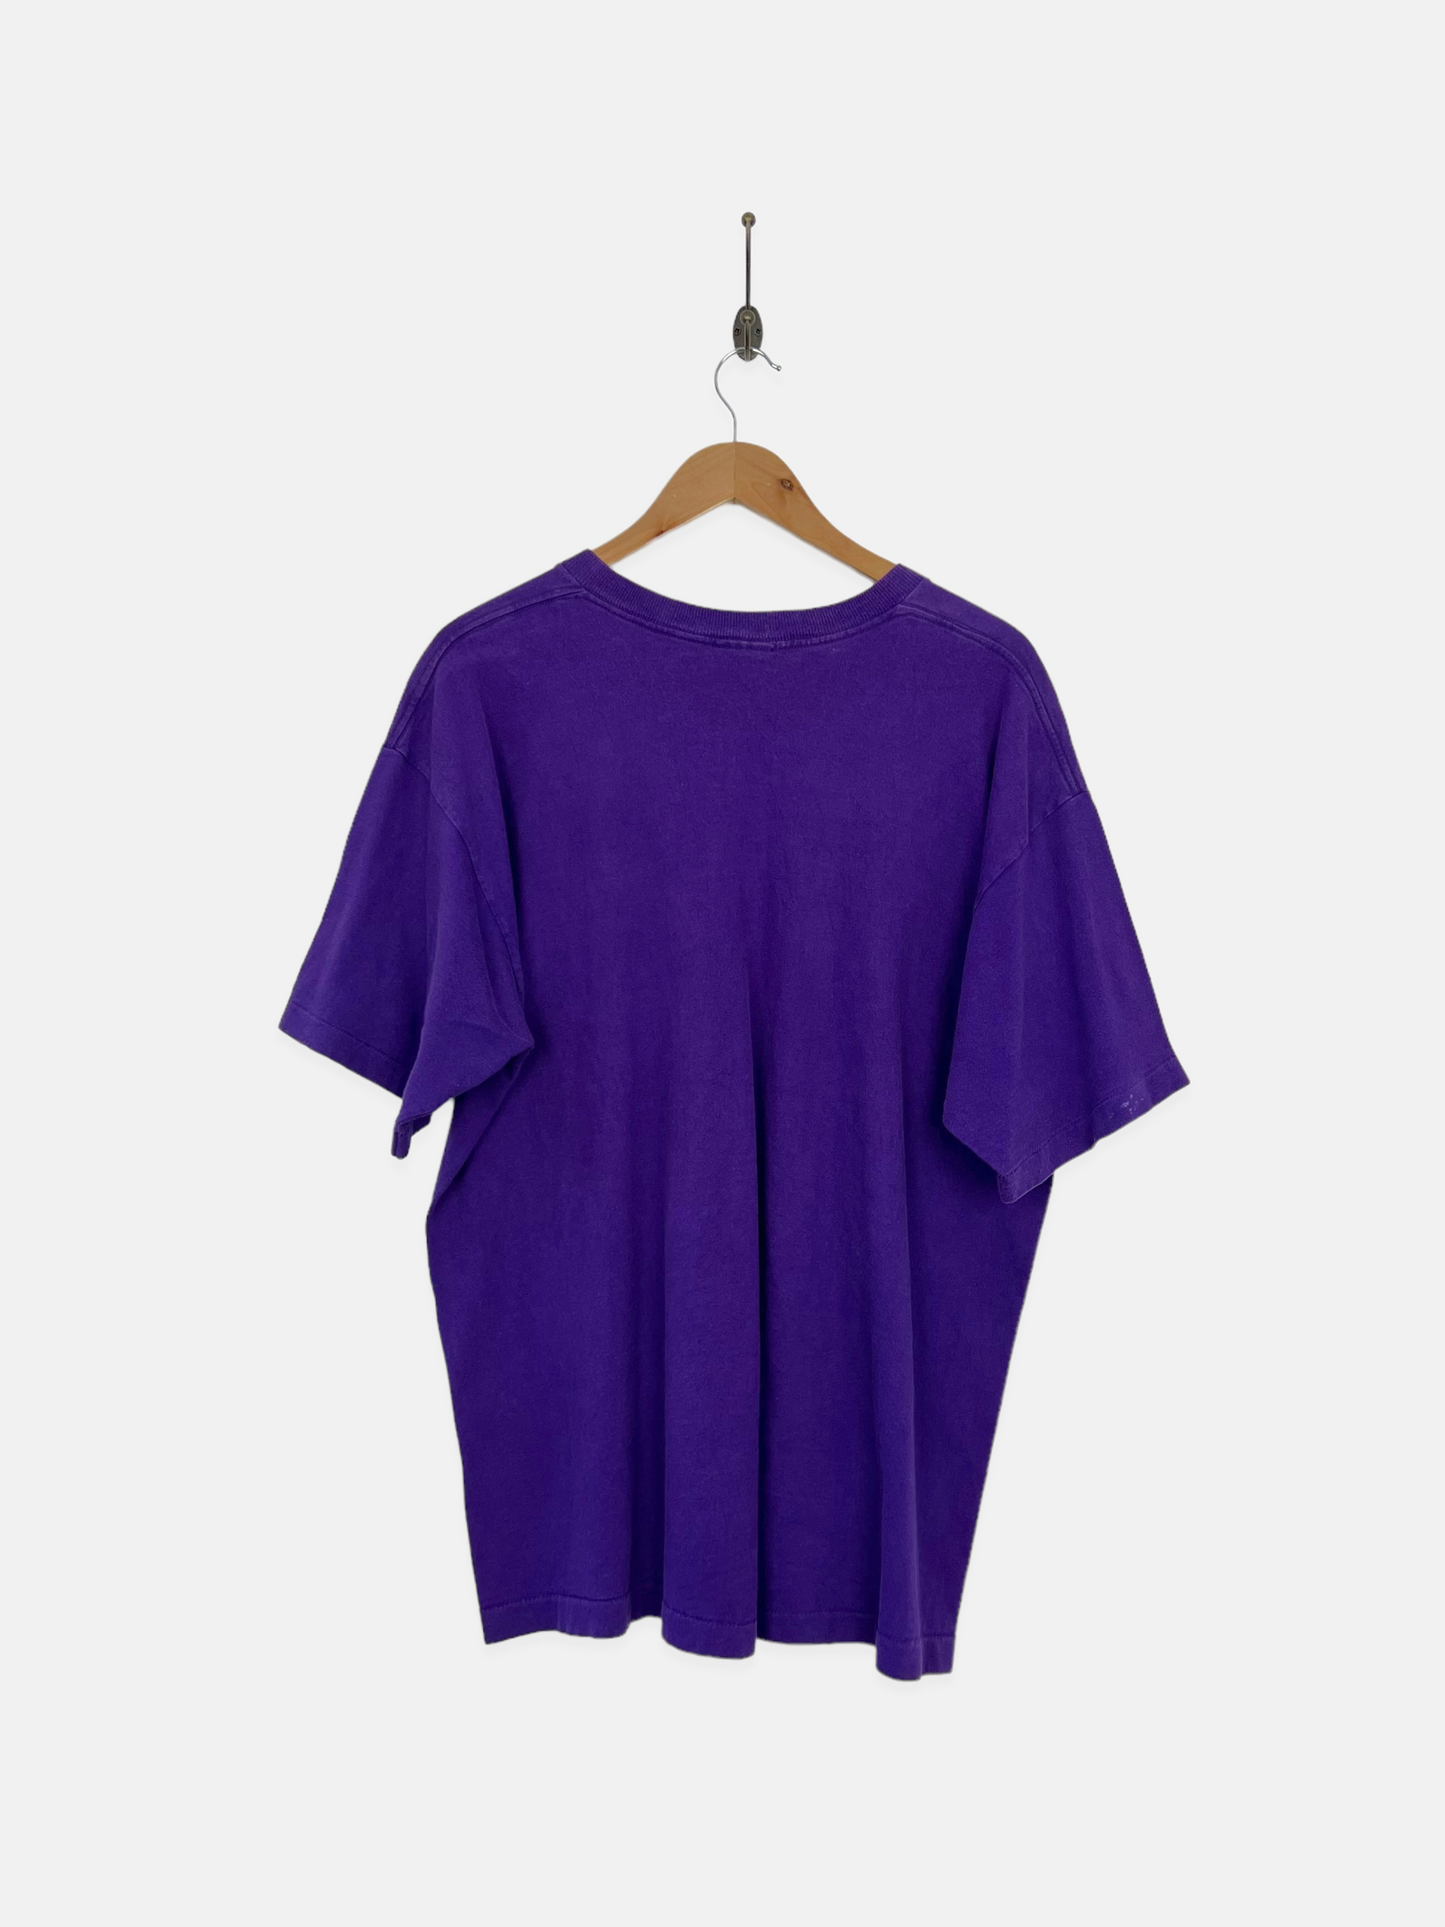 1996 Baltimore Ravens NFL Vintage T-Shirt Size XL